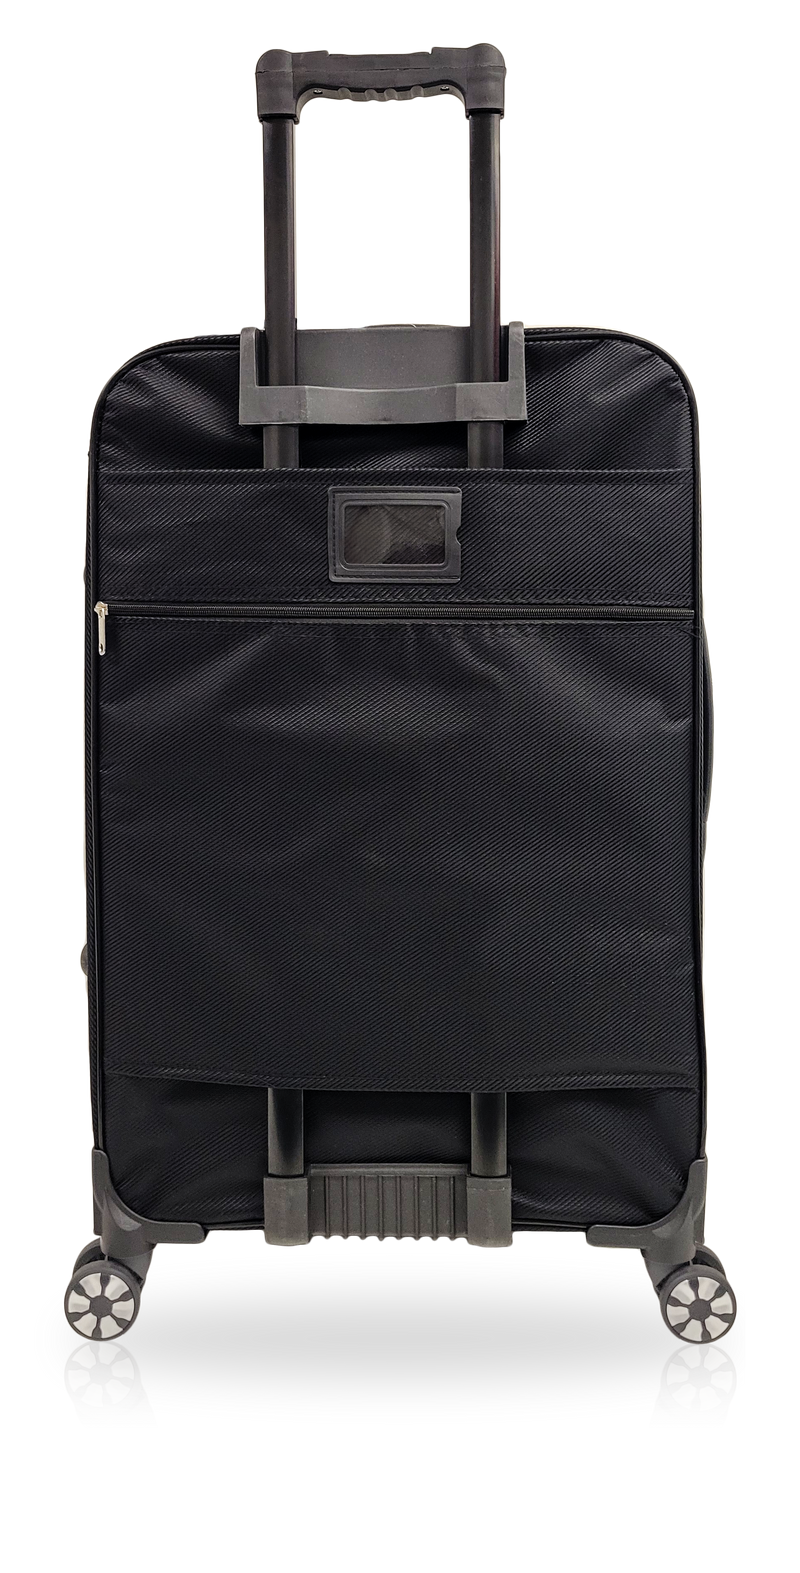 TOSCANO Aiutante 27-inch Lightweight Luggage Suitcase